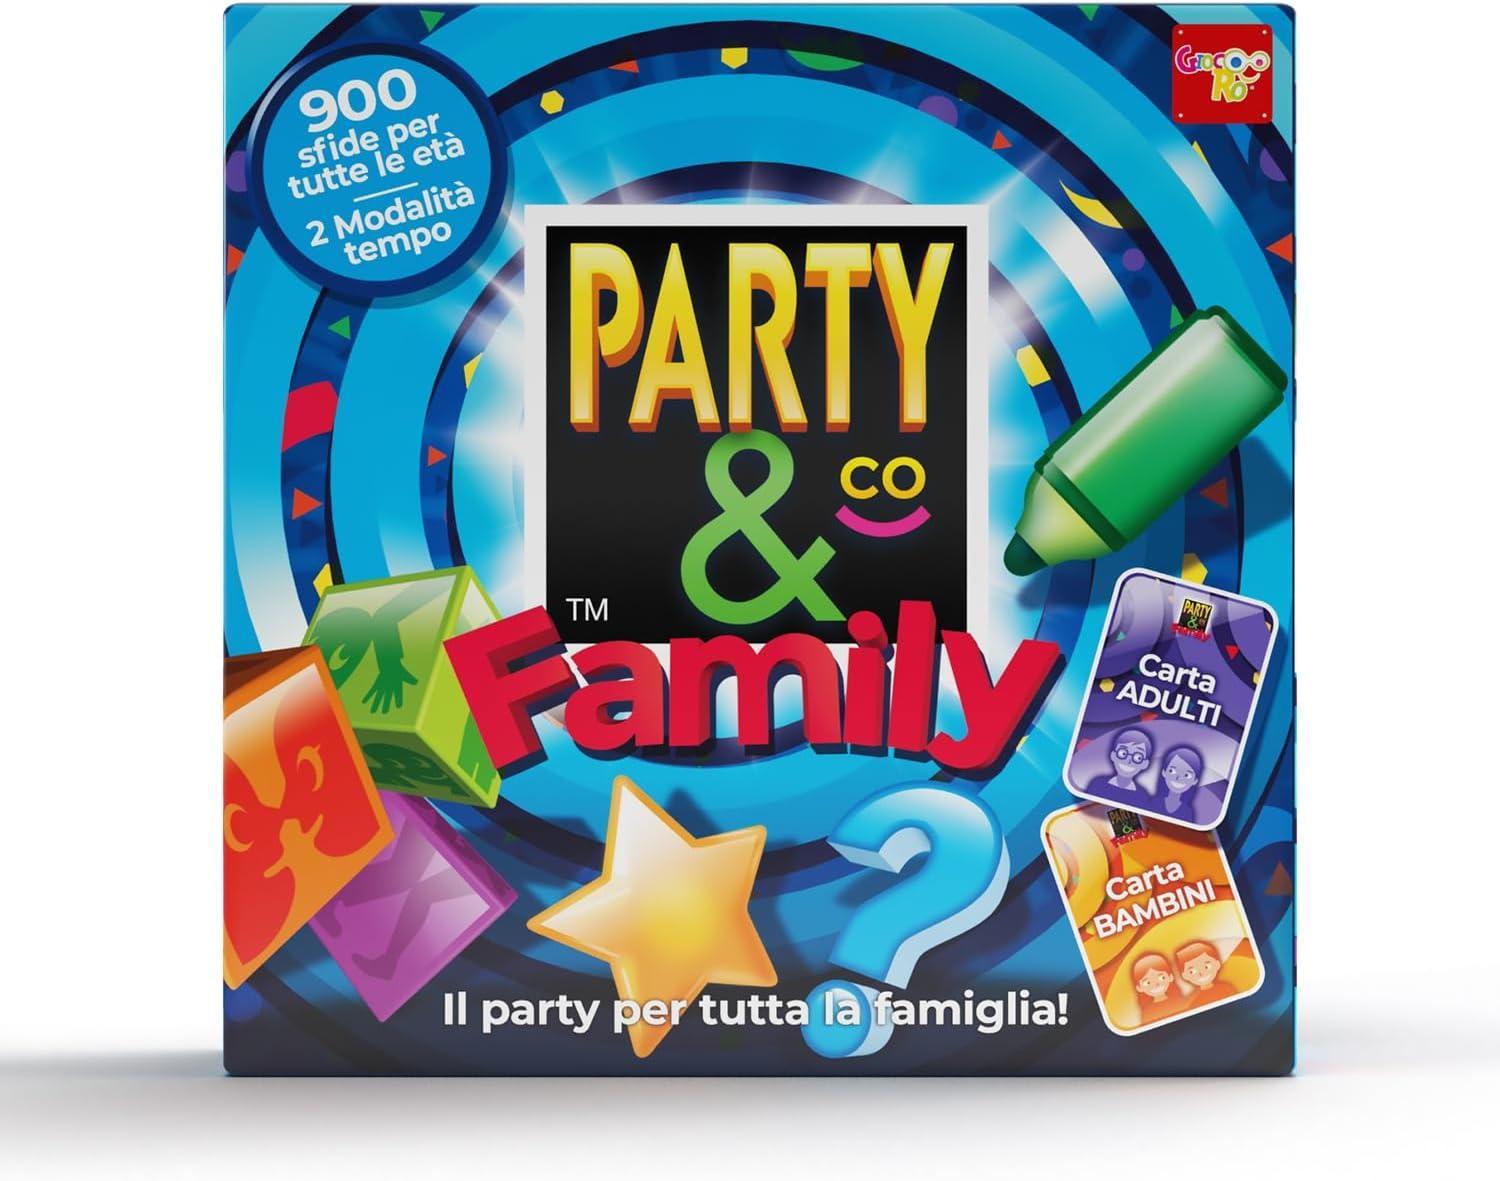 rocco giocattoli party & co family